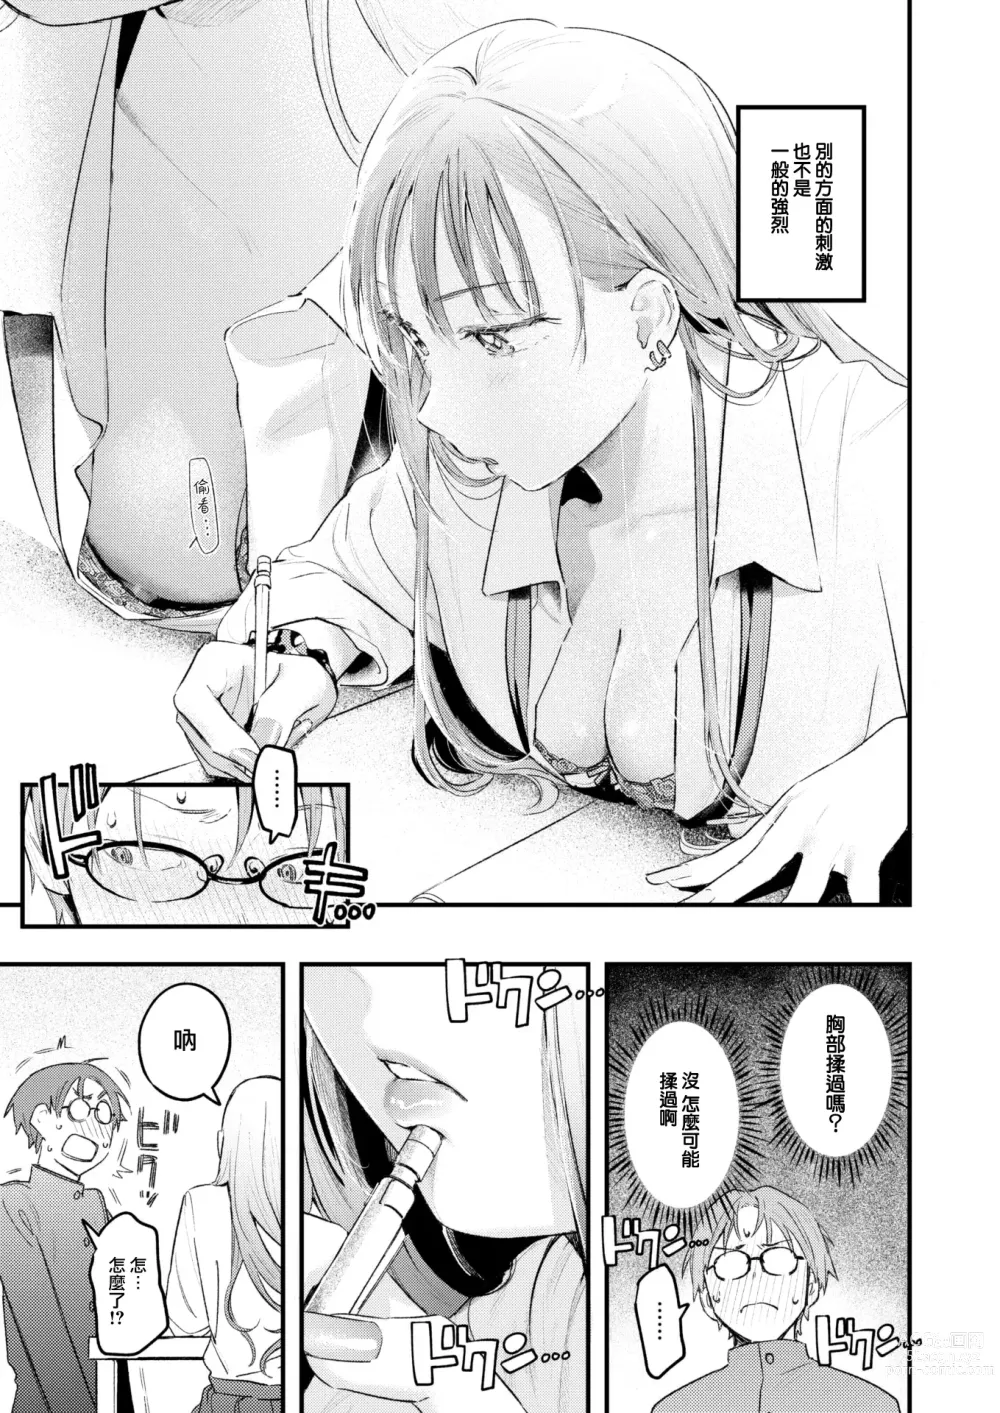 Page 10 of manga Oazuke - The hidden emotions.